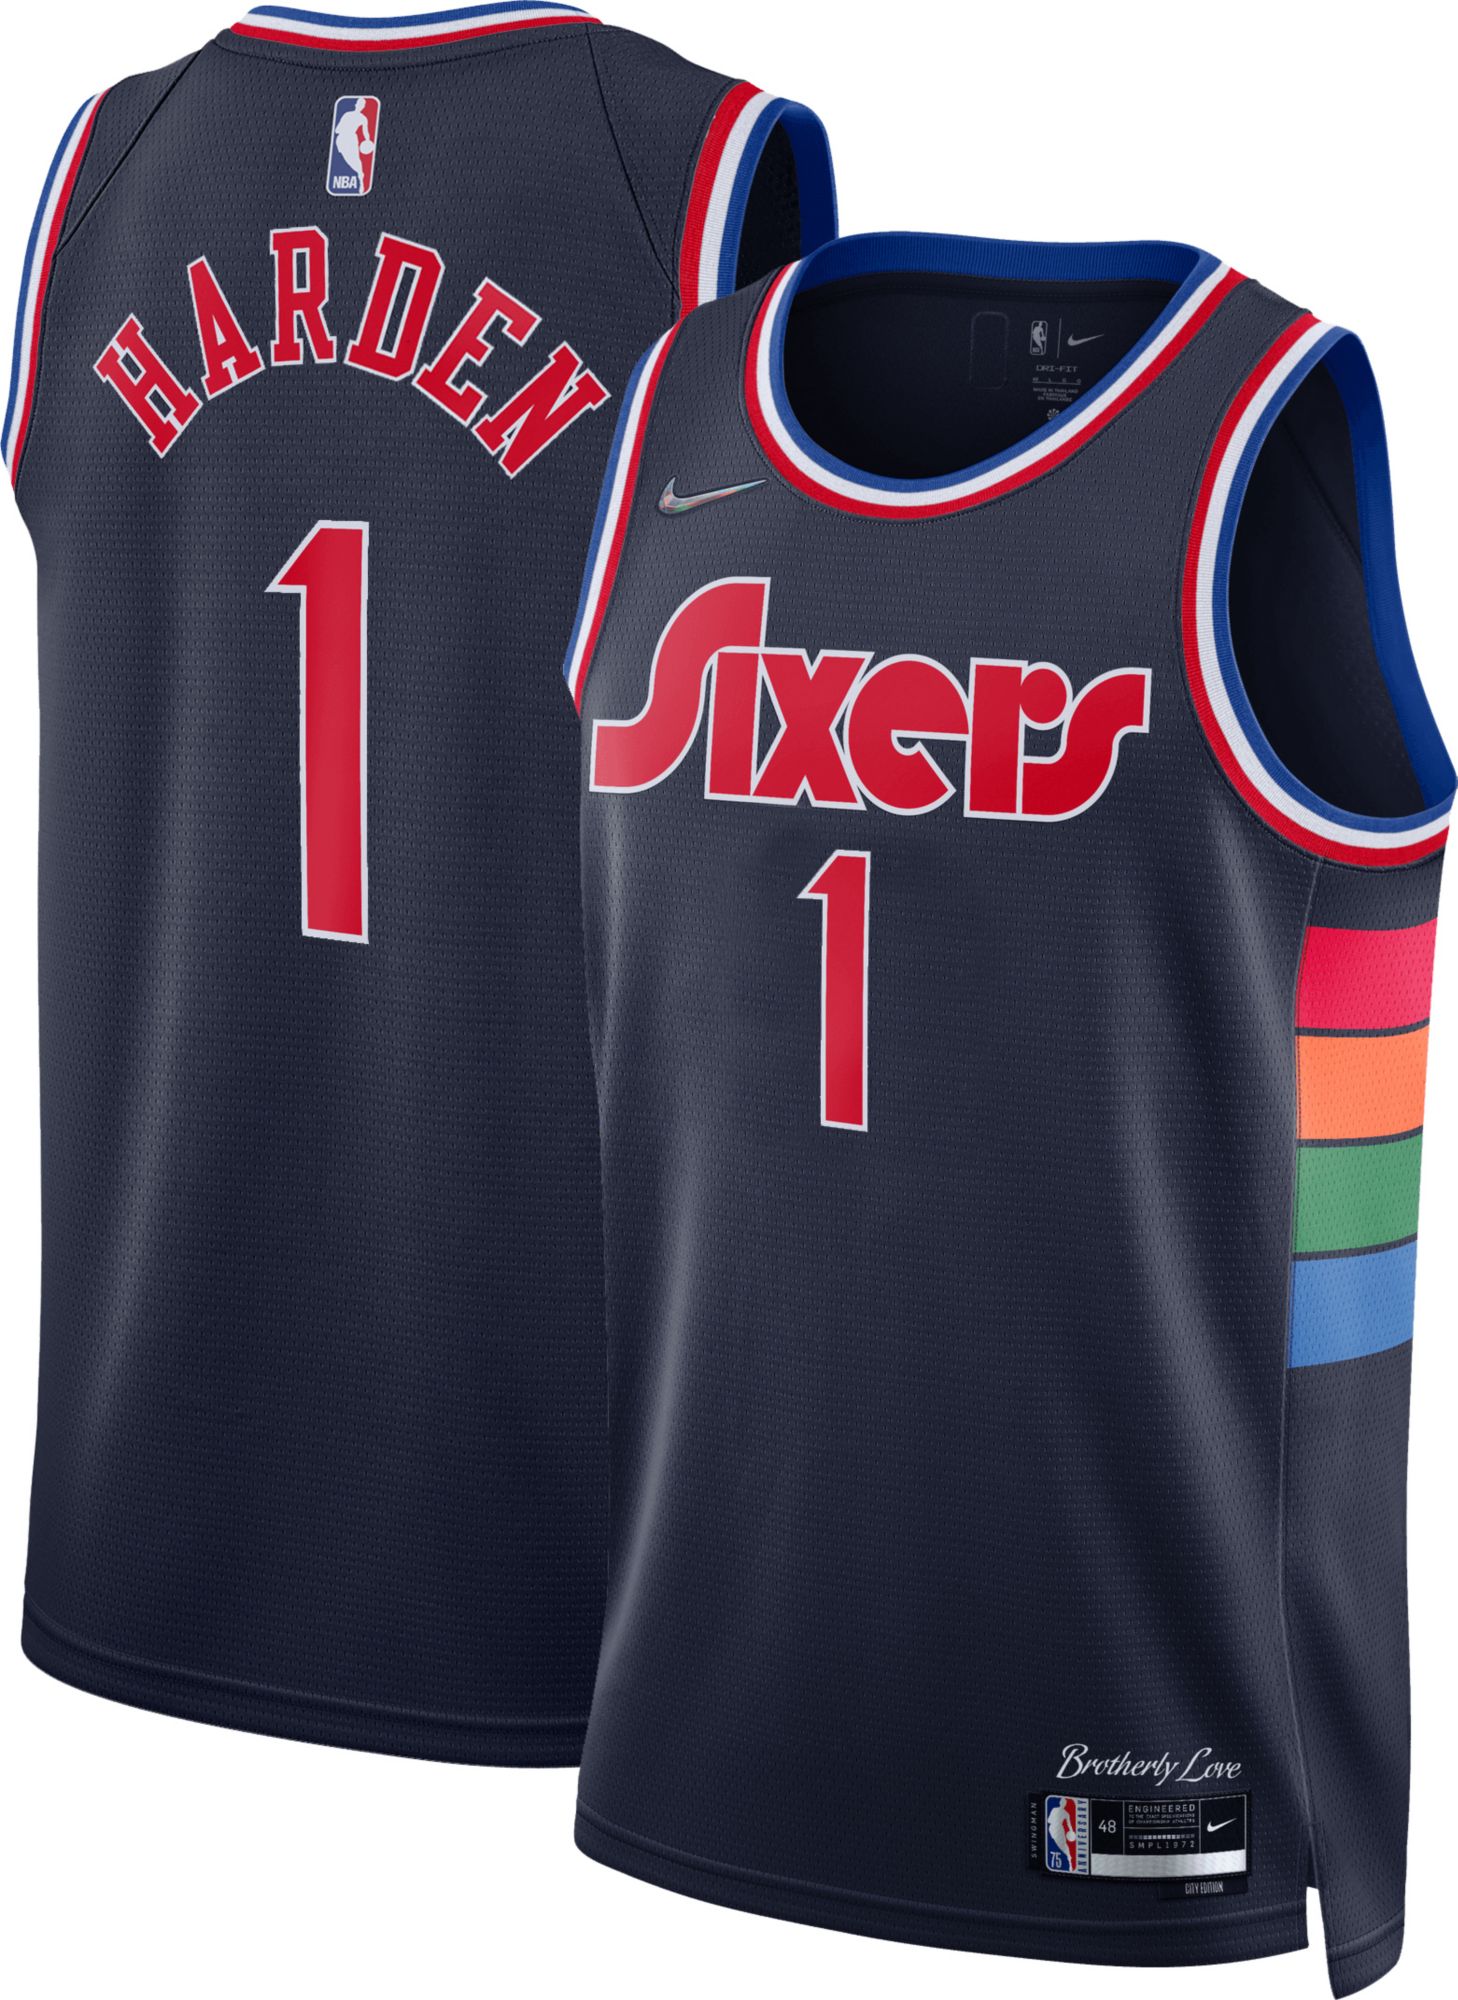 76ers city edition uniform